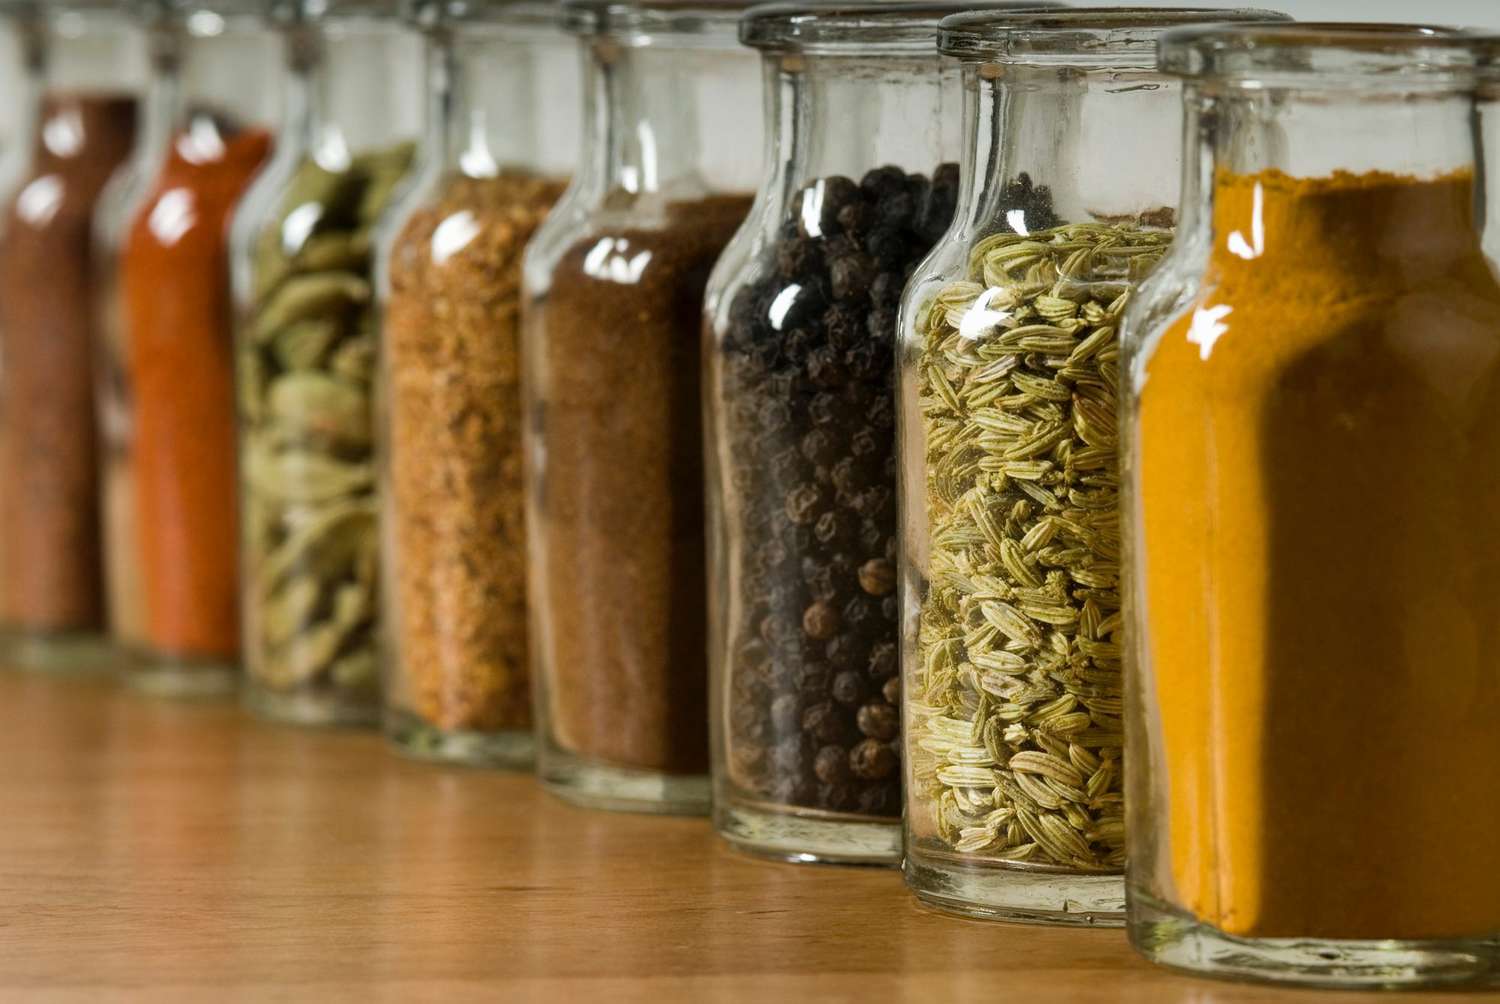 Row of spice jars